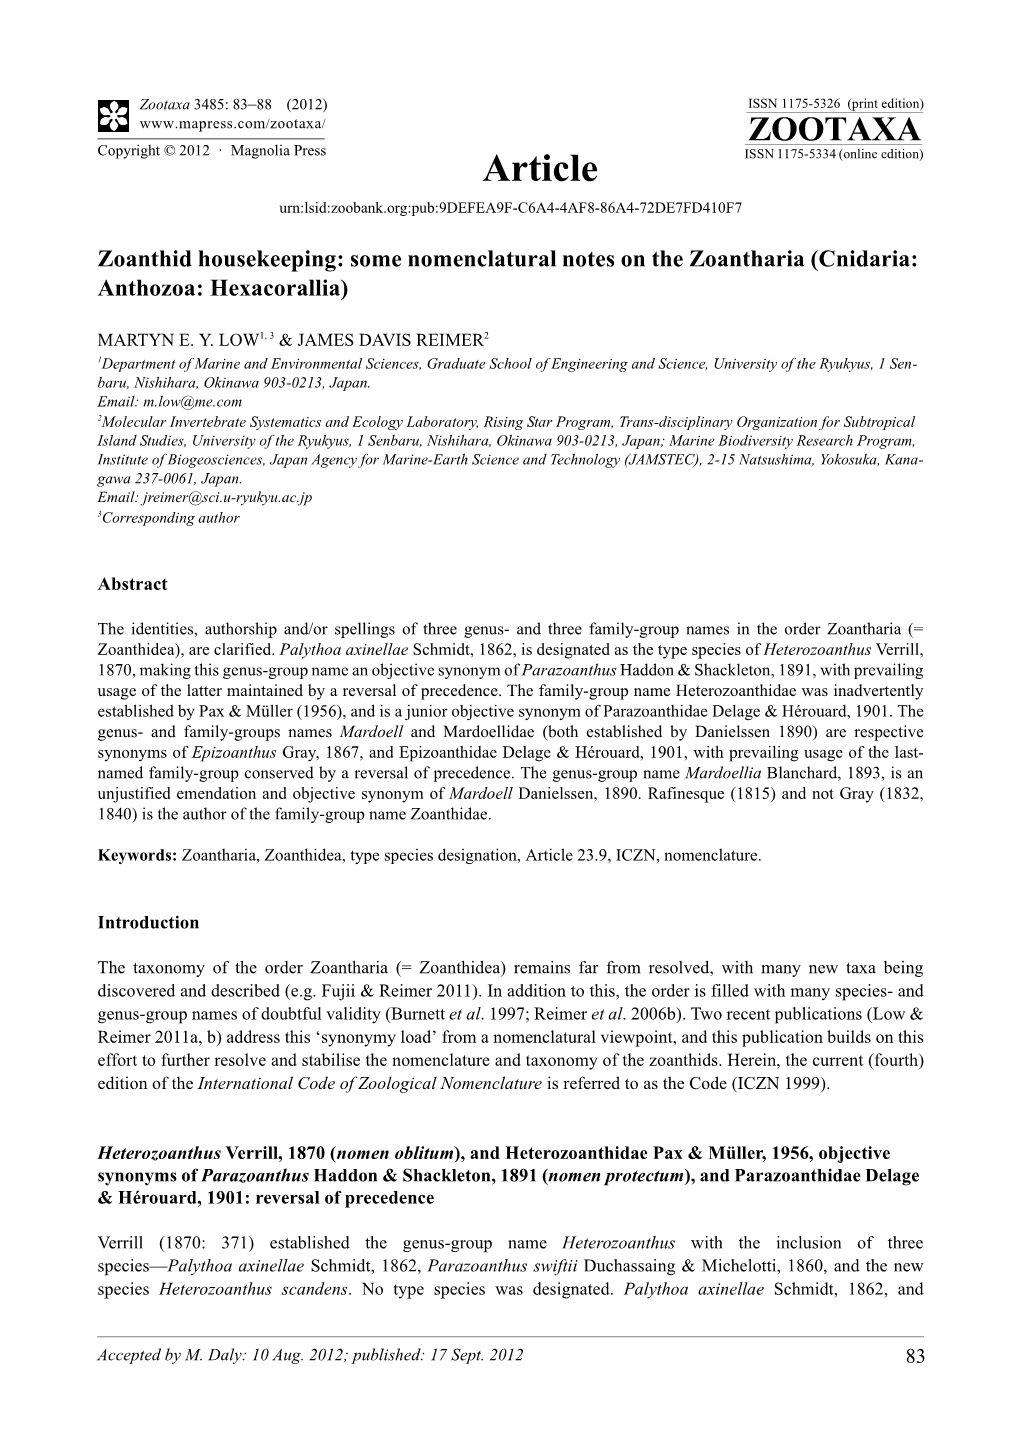 Zoanthid Housekeeping: Some Nomenclatural Notes on the Zoantharia (Cnidaria: Anthozoa: Hexacorallia)